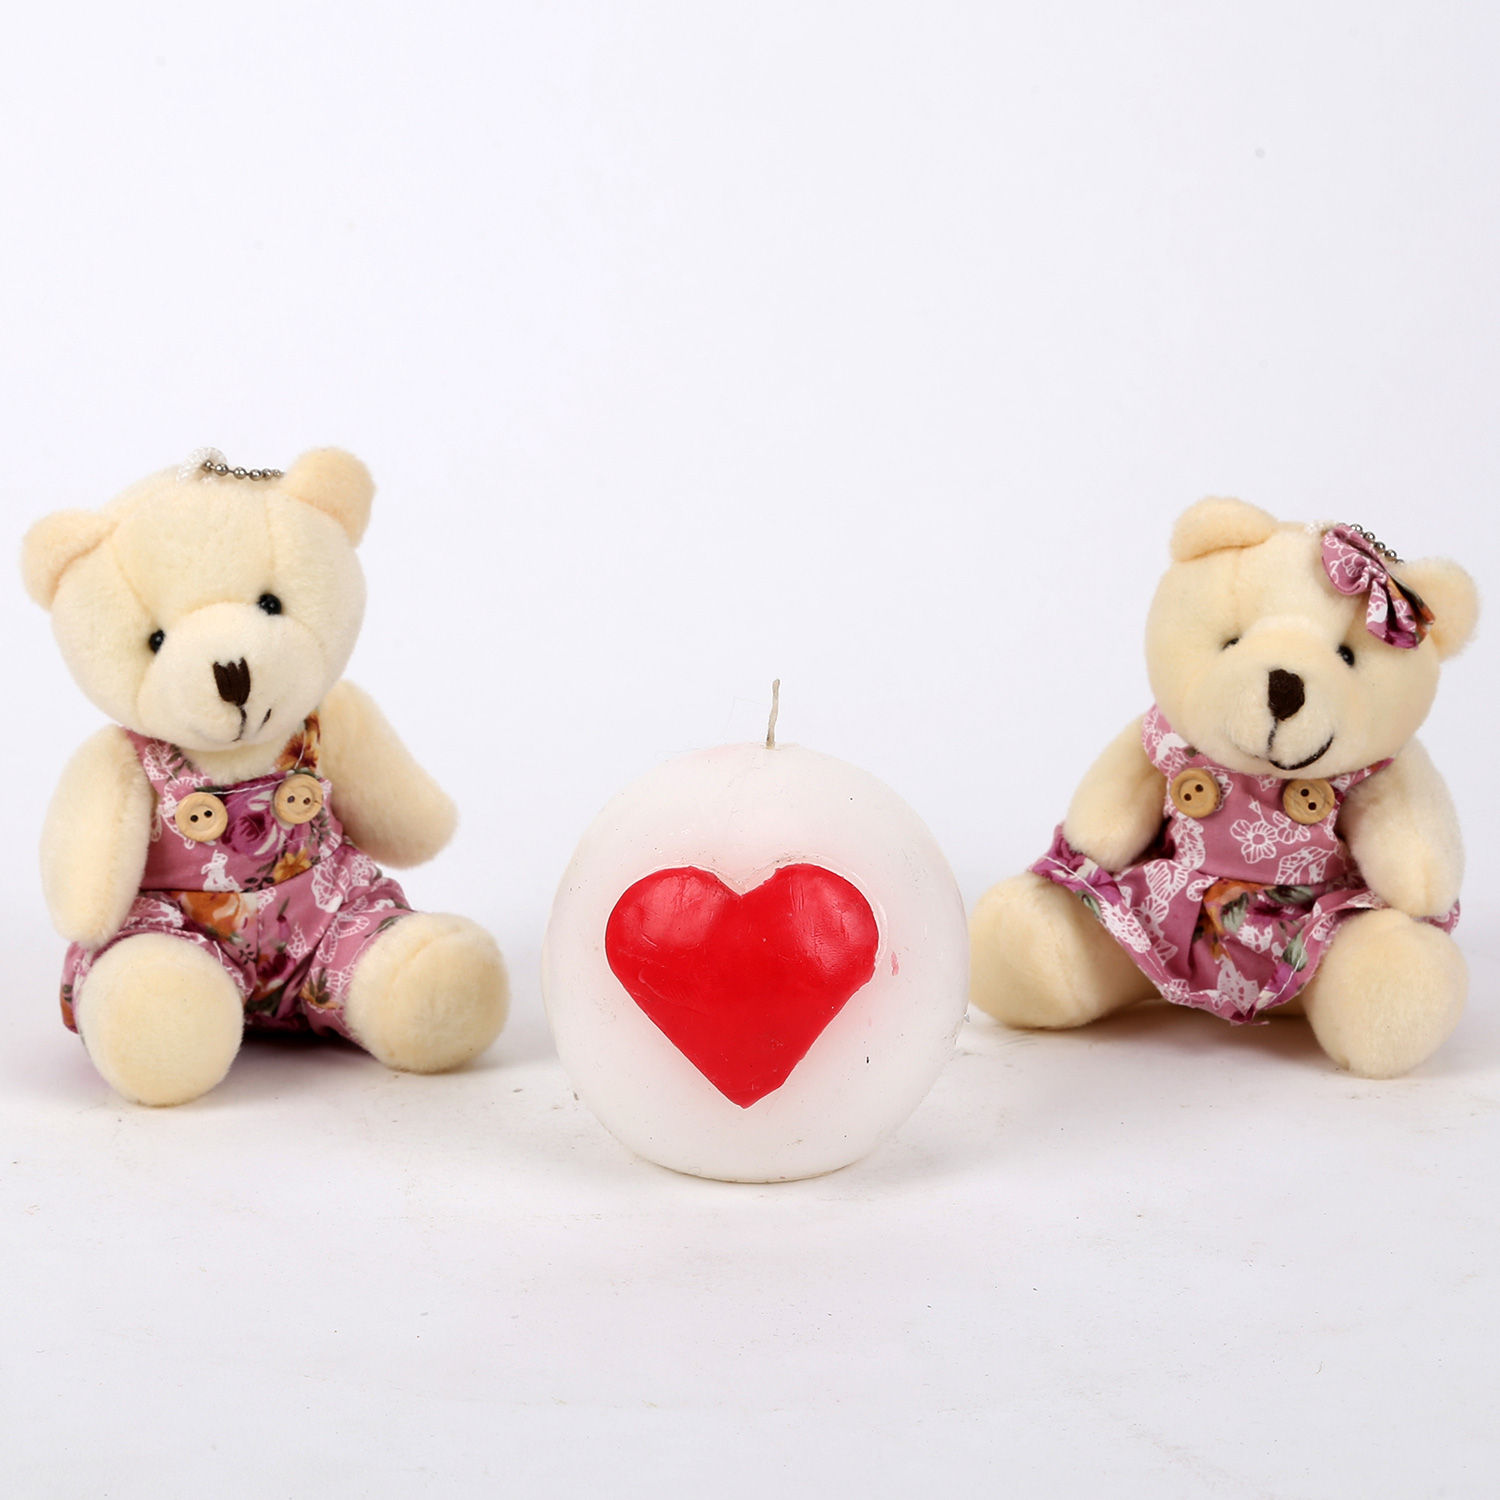 Buy/Send Teddy Bears & Ball Candles in Pink Box Online- Ferns N Petals